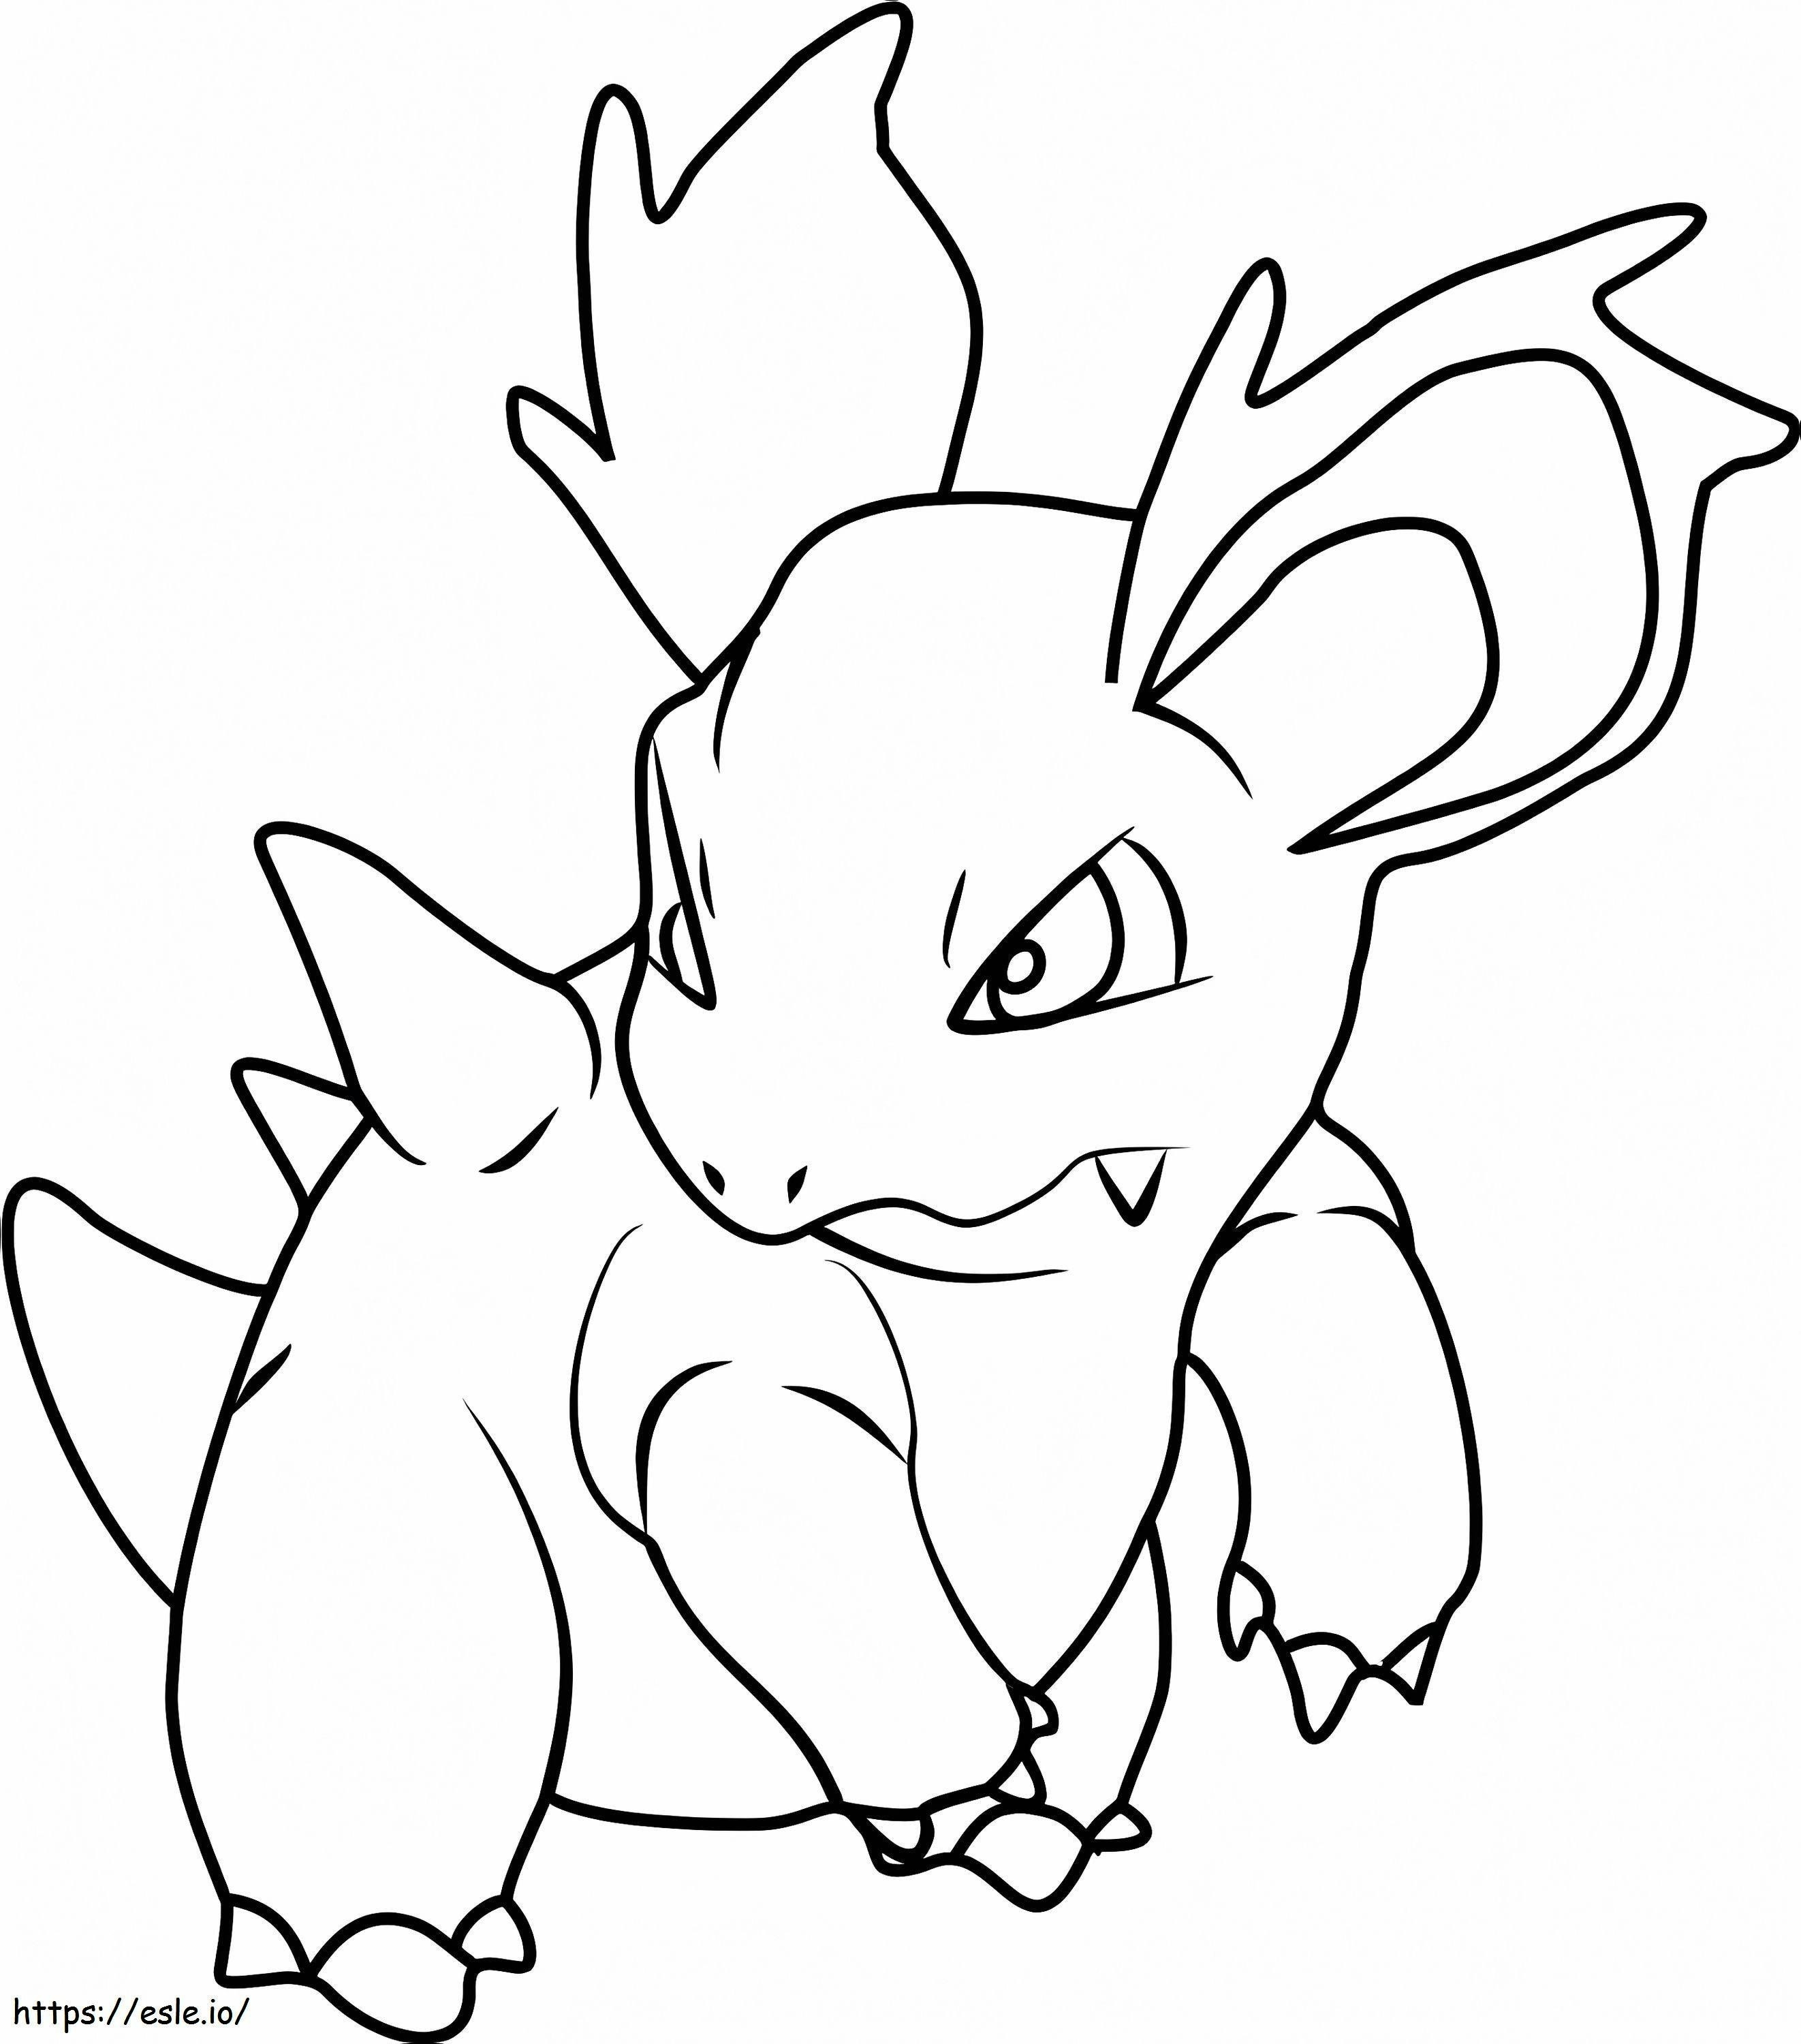 Coloriage Pokémon Nidorina à imprimer dessin